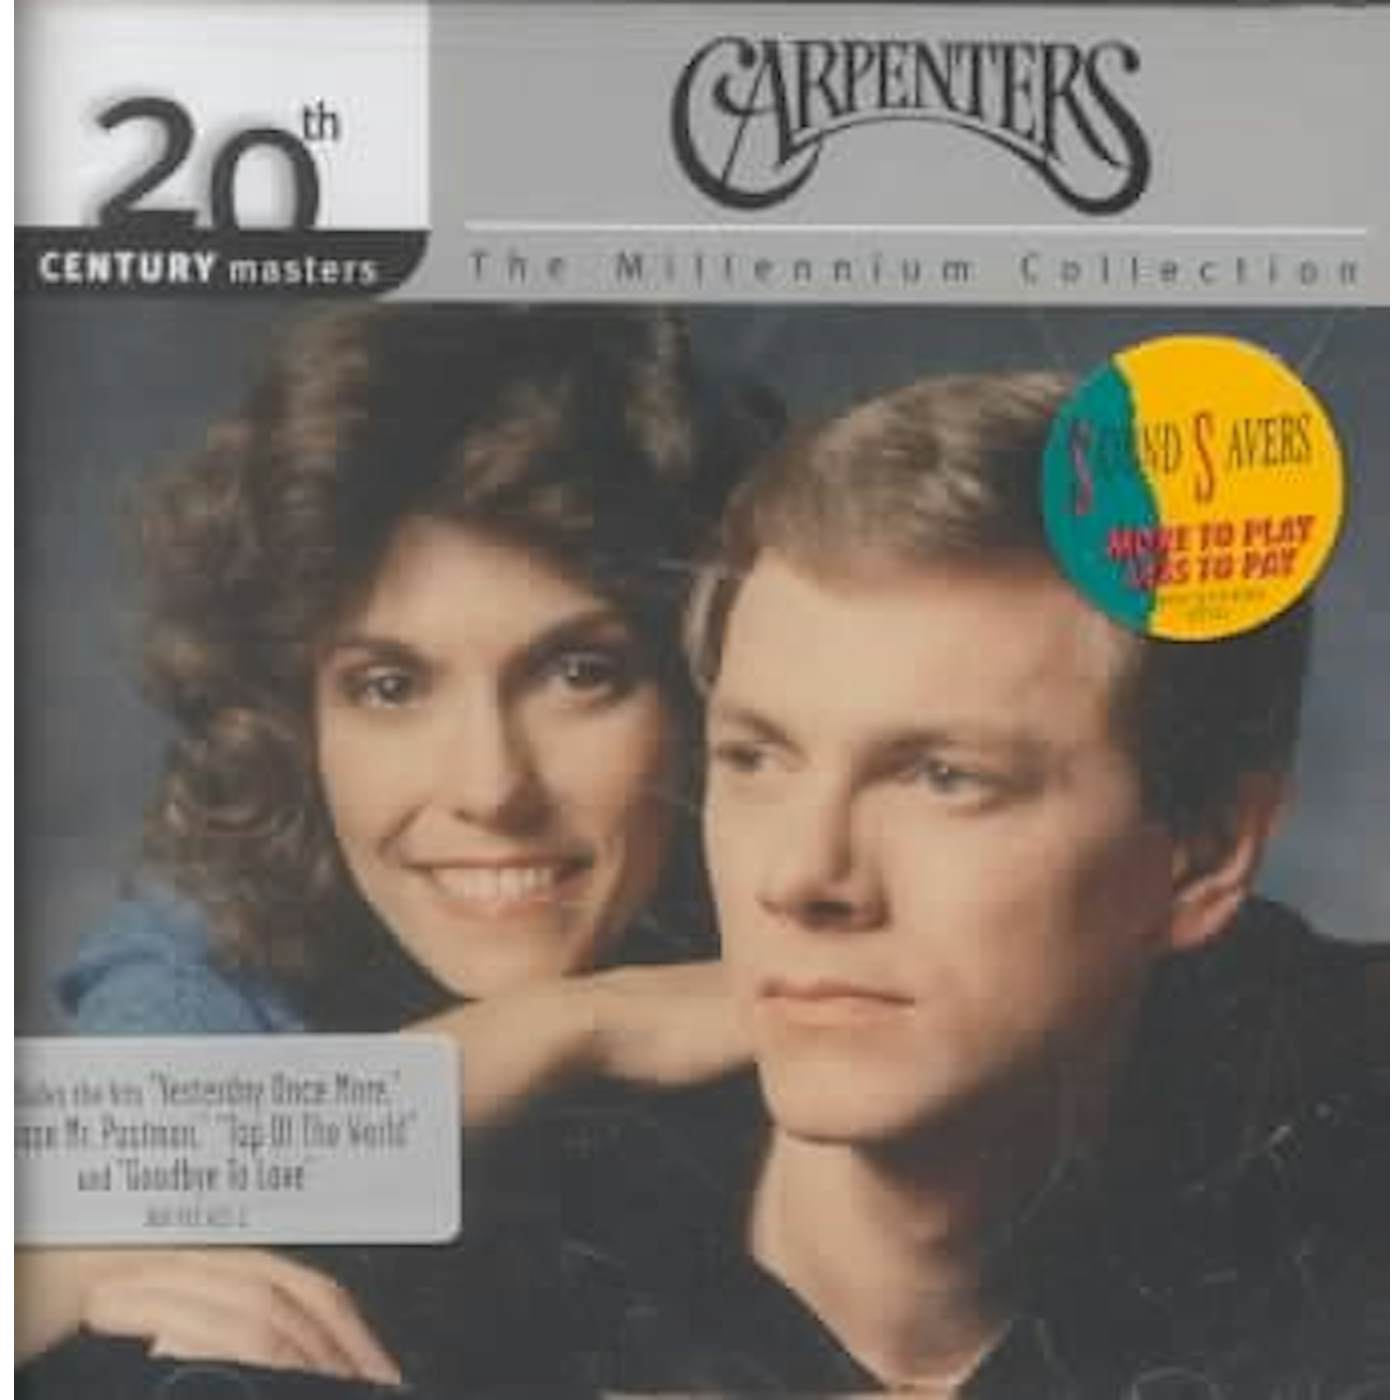 Carpenters MILLENNIUM COLLECTION: 20TH CENTURY MASTERS CD